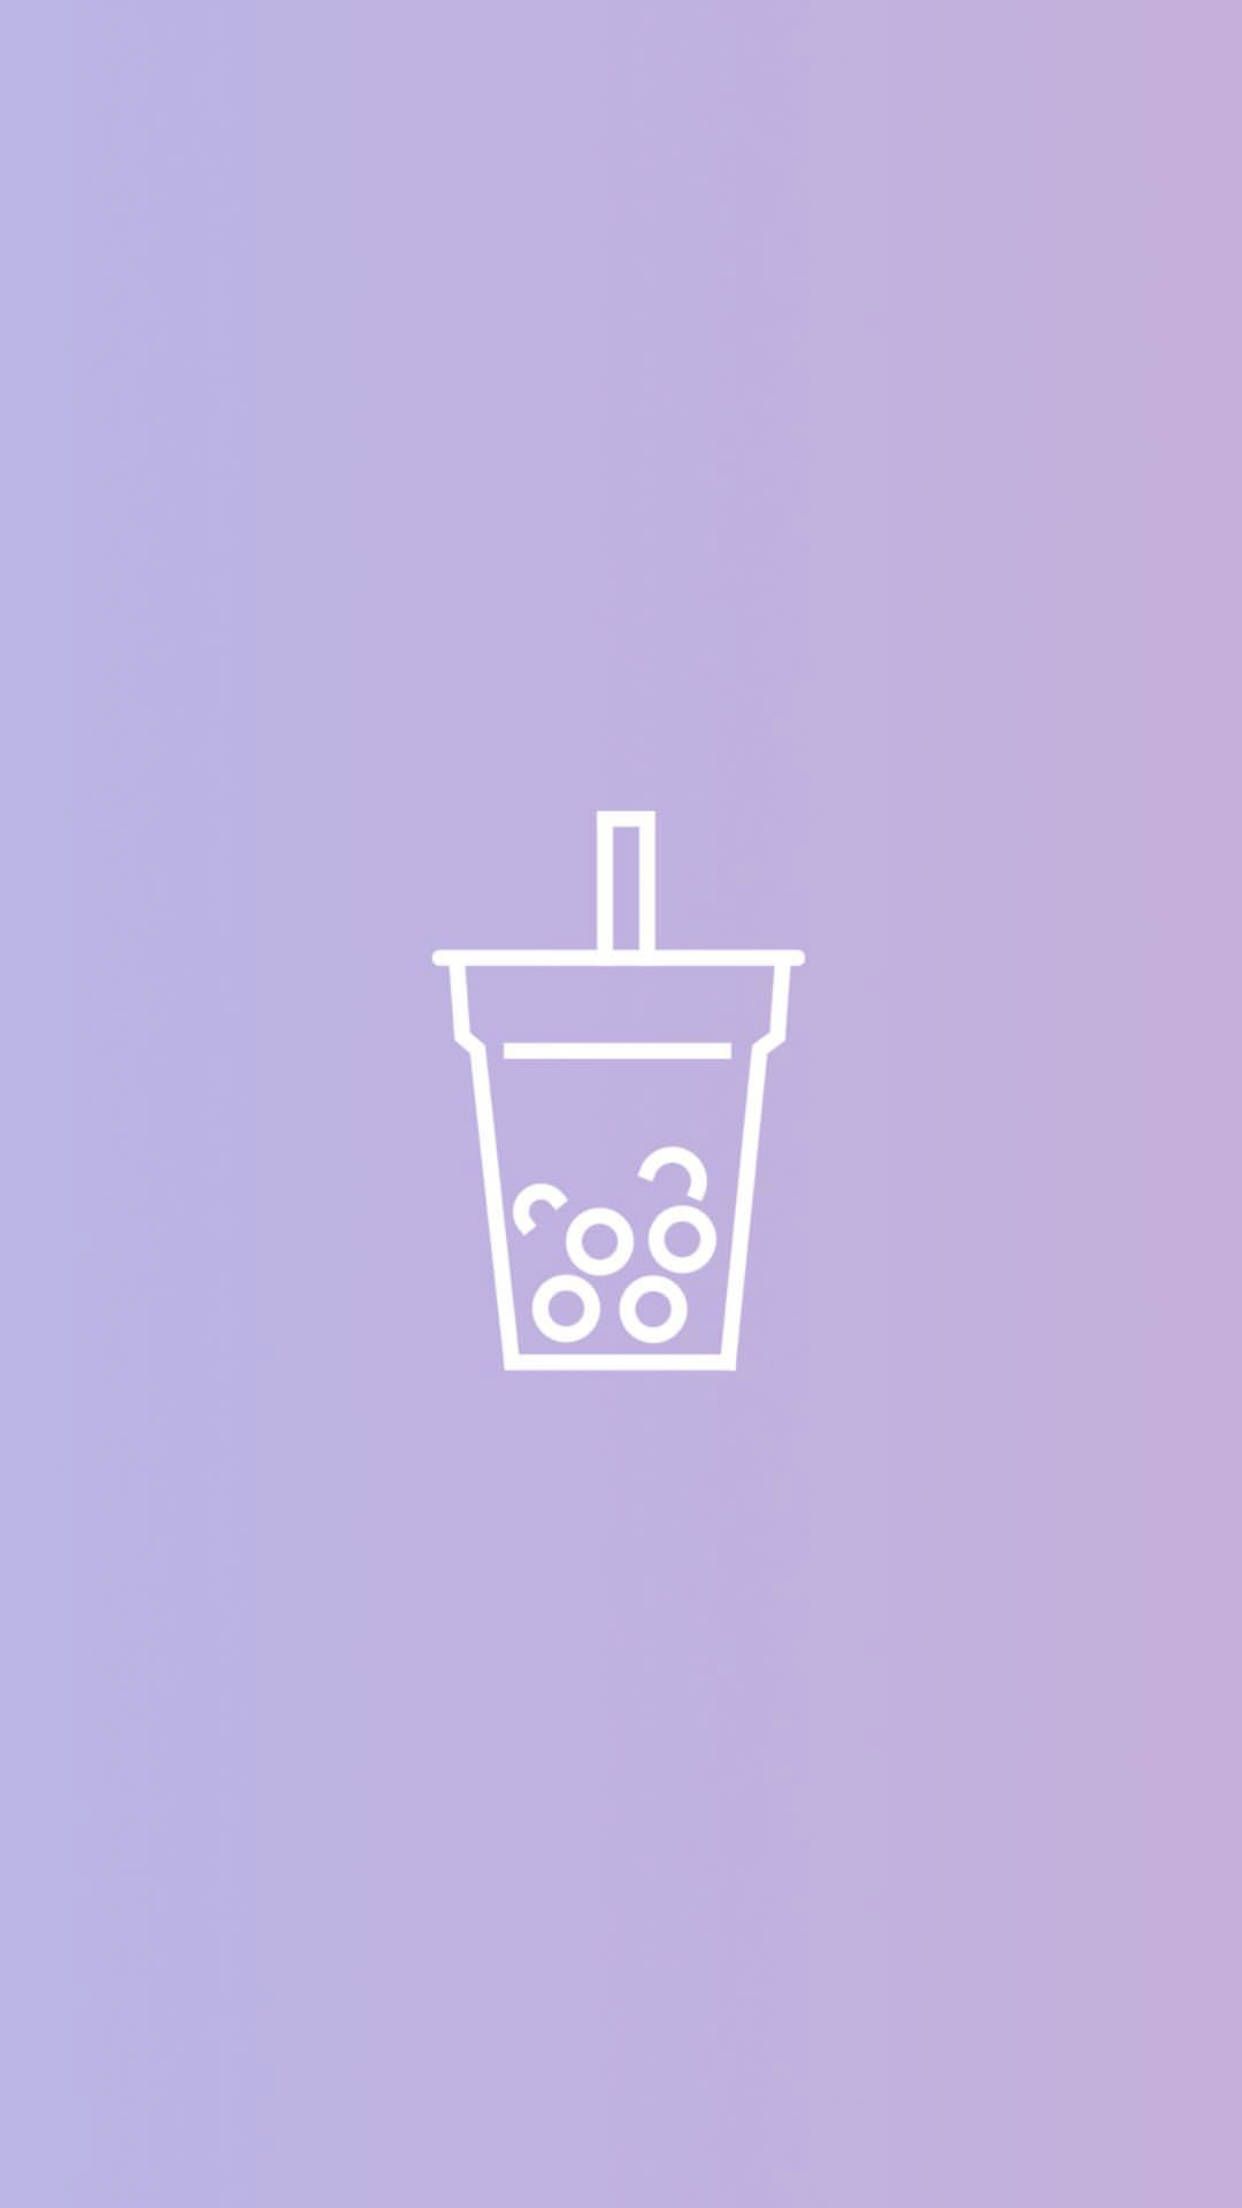 A purple and white graphic of a bubble tea - Boba